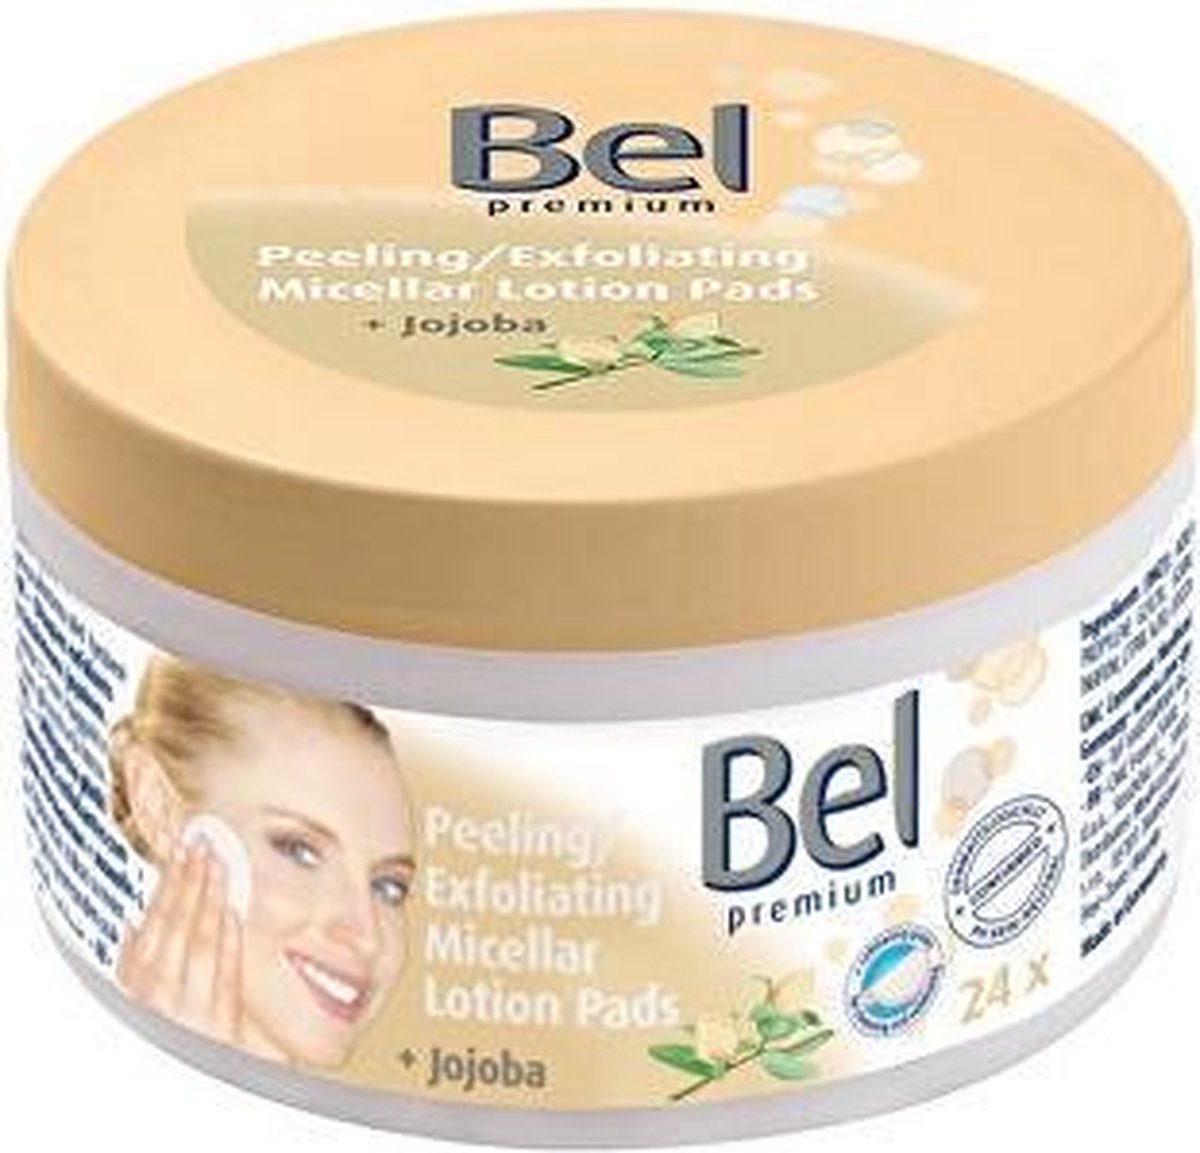 Bel - Lotion Pads (Jojoba, 24 ks) Peeling wet wipes -